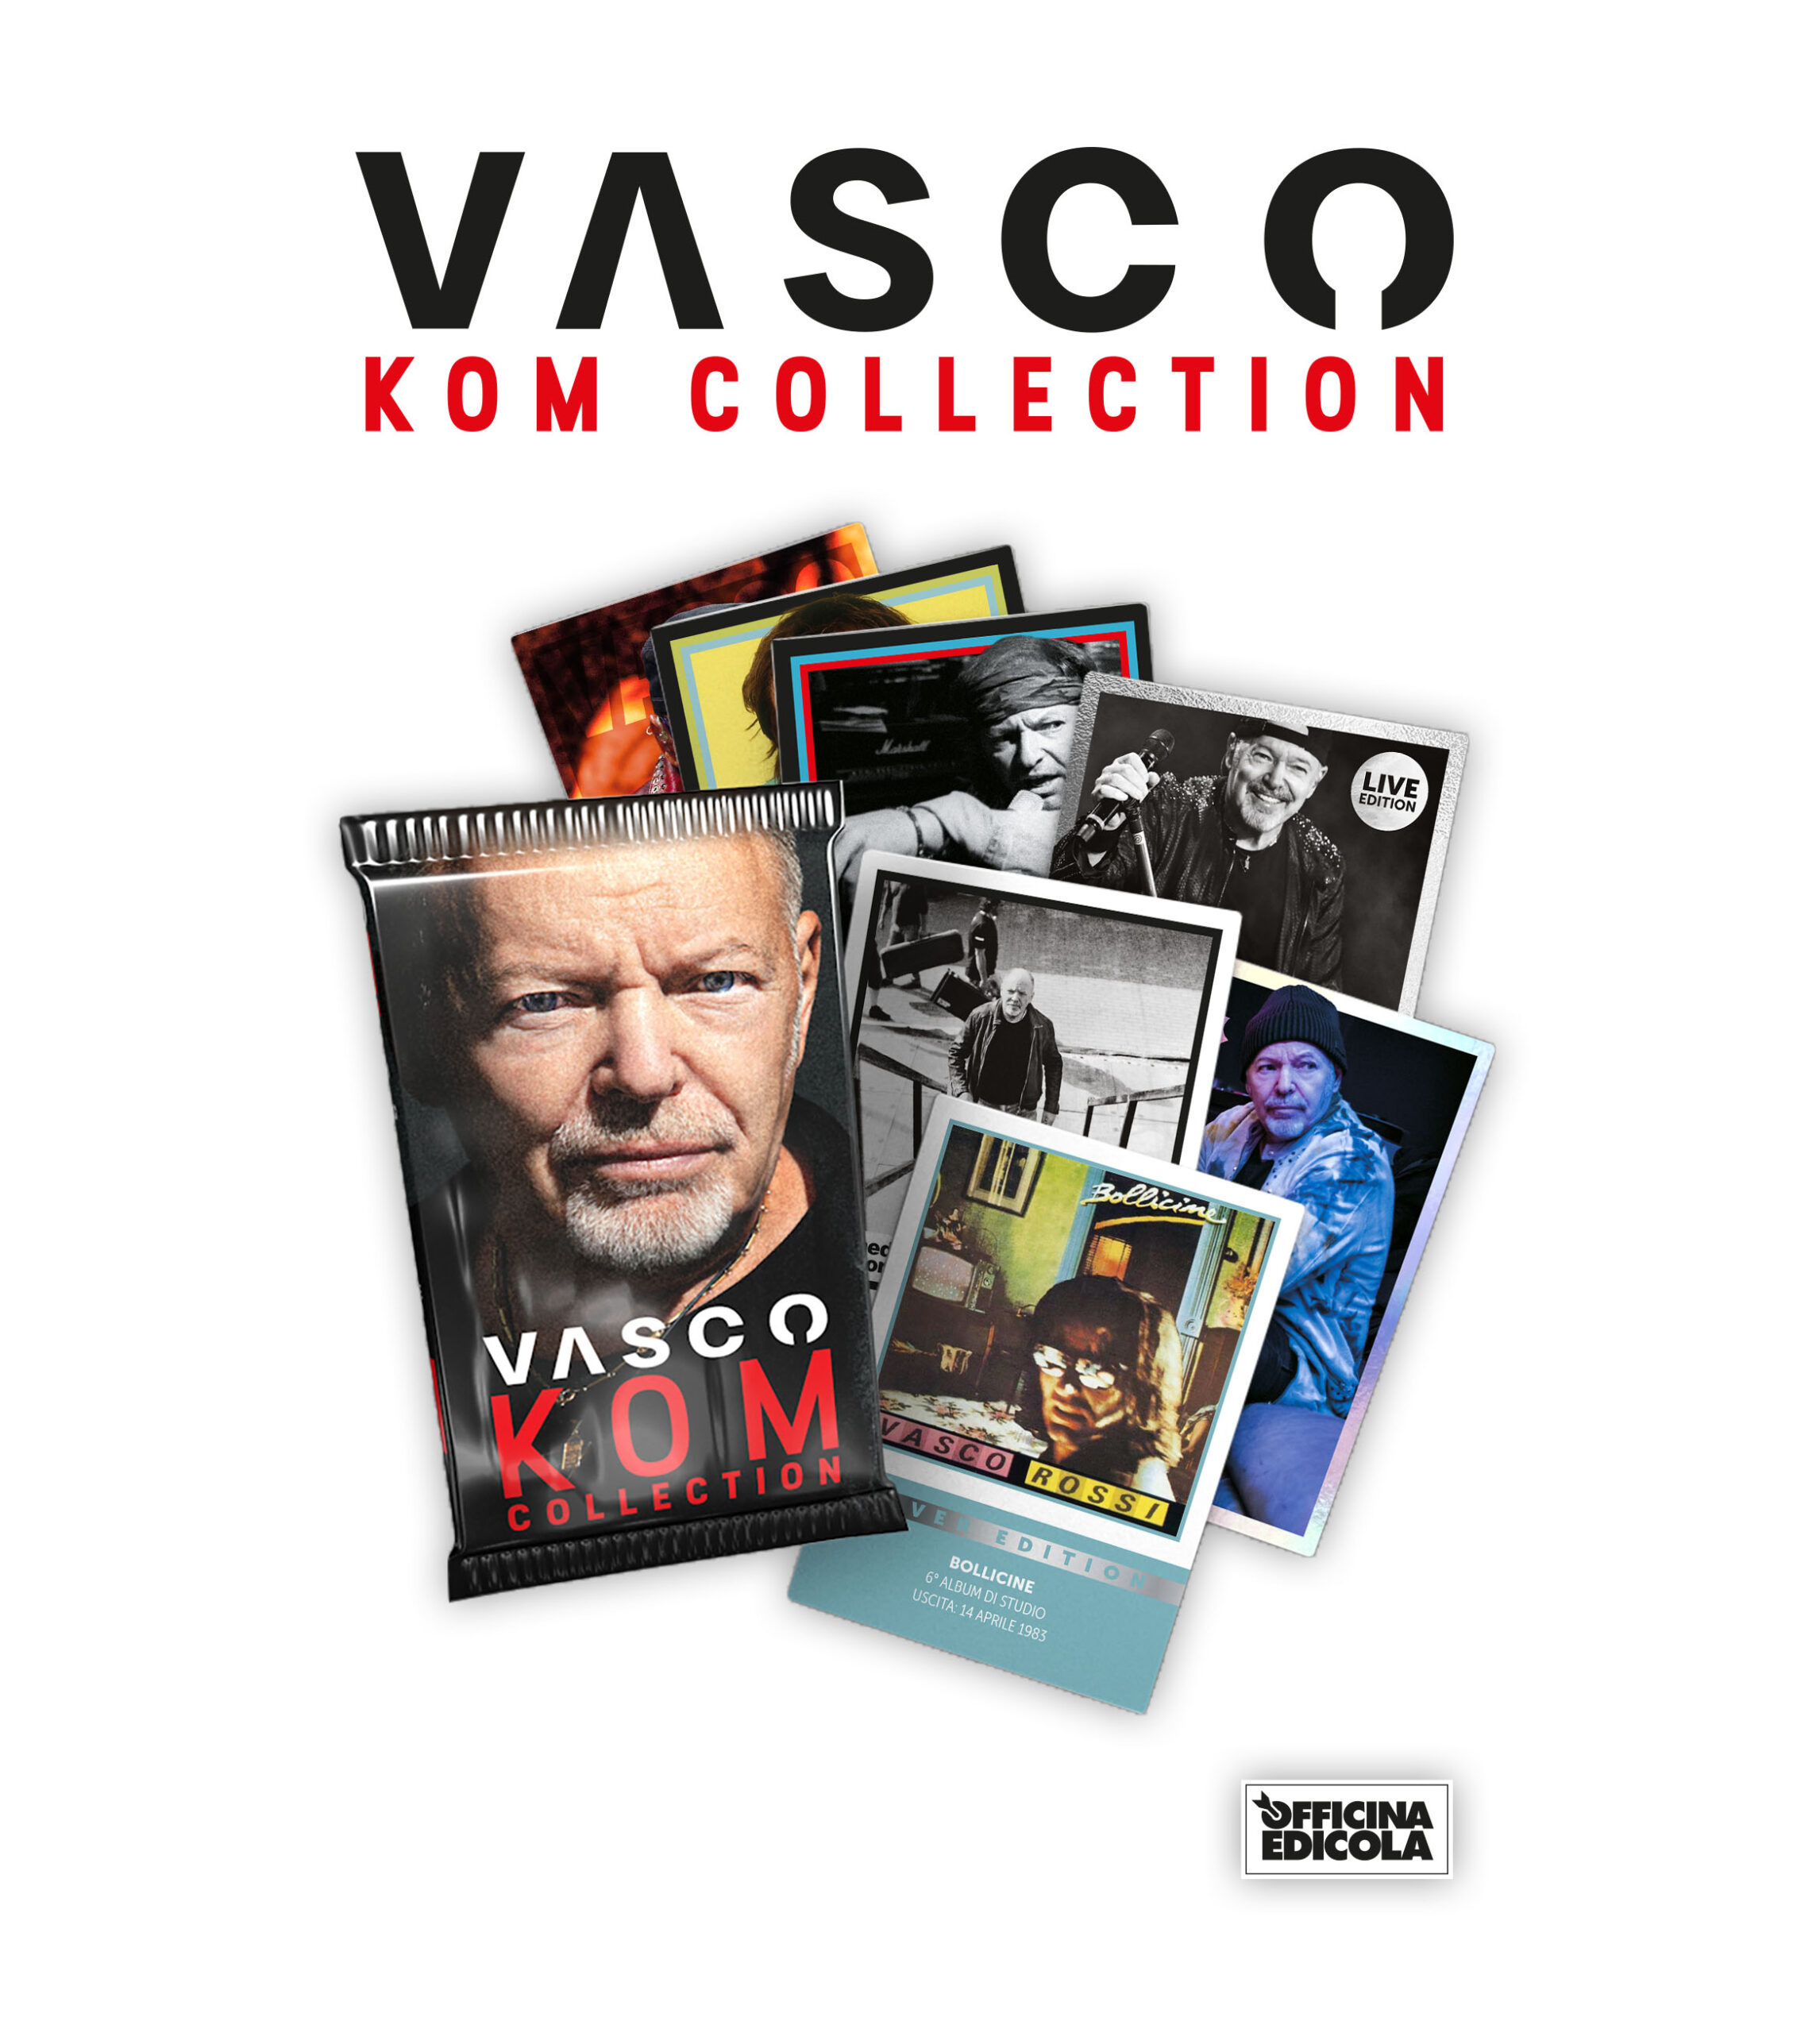 Vasco Kom Collection